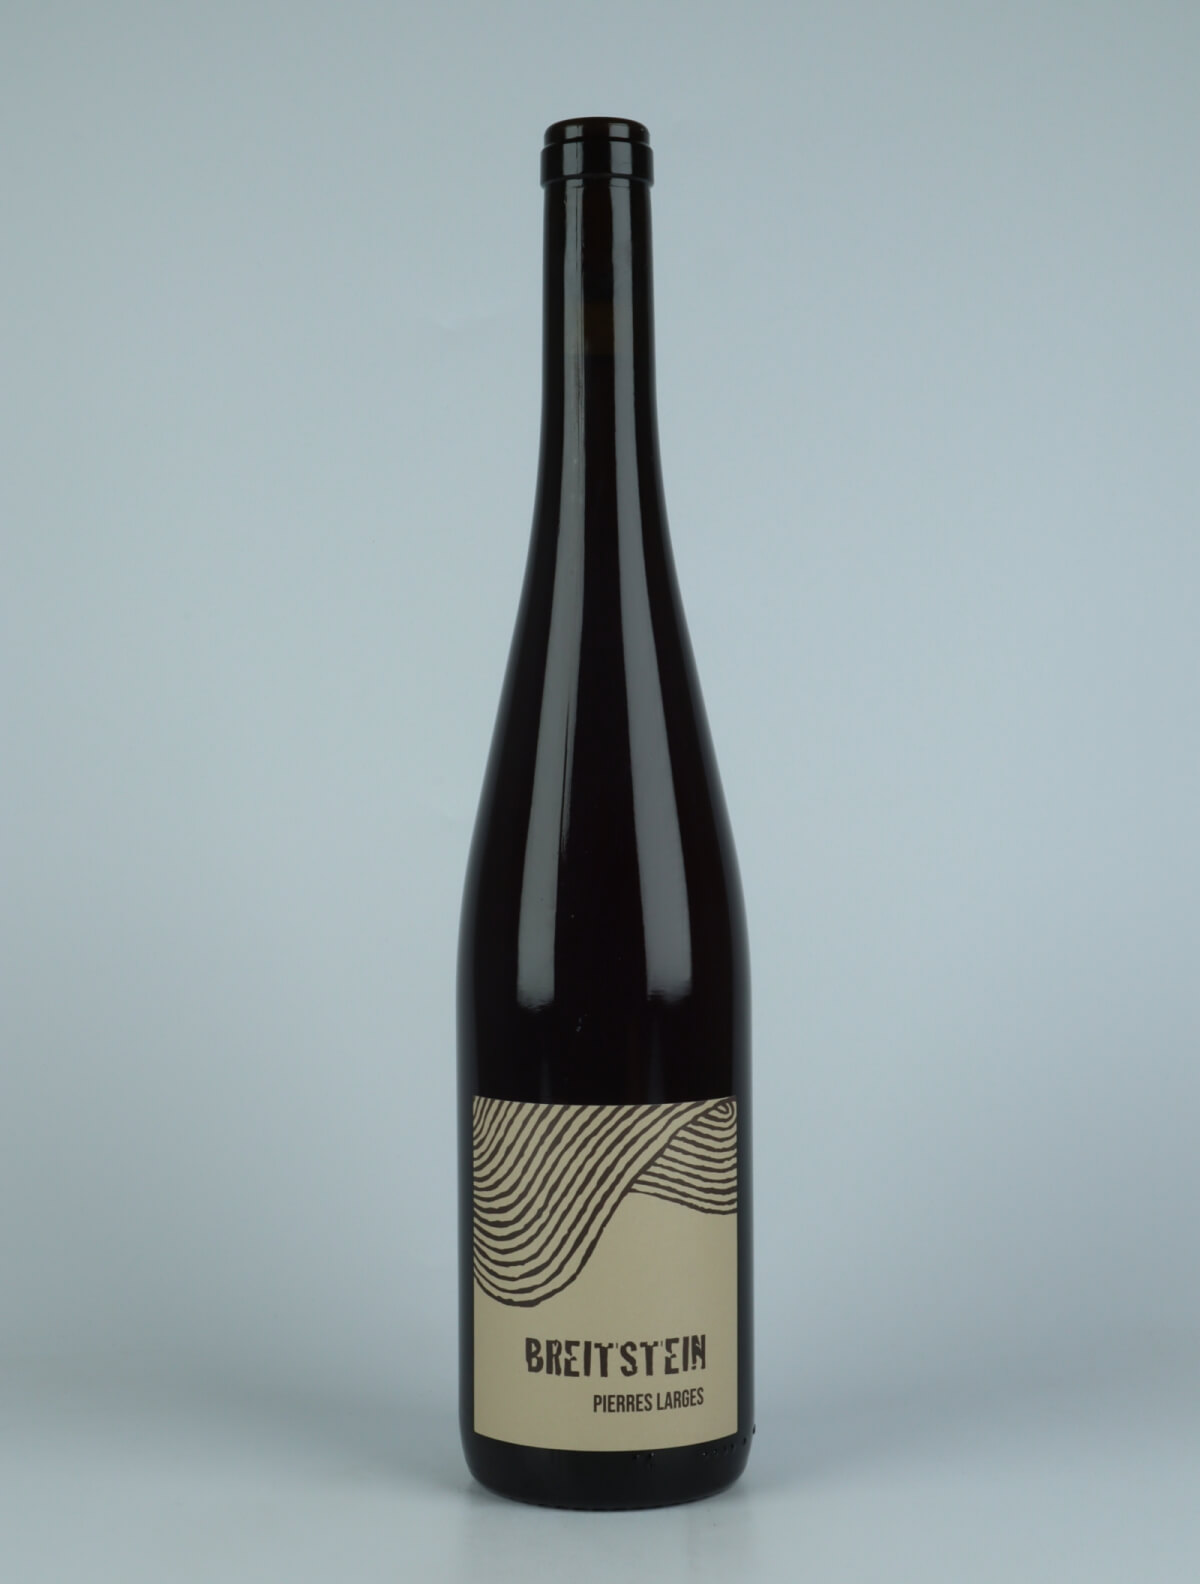 A bottle 2021 Breitstein Red wine from Ruhlmann Dirringer, Alsace in France